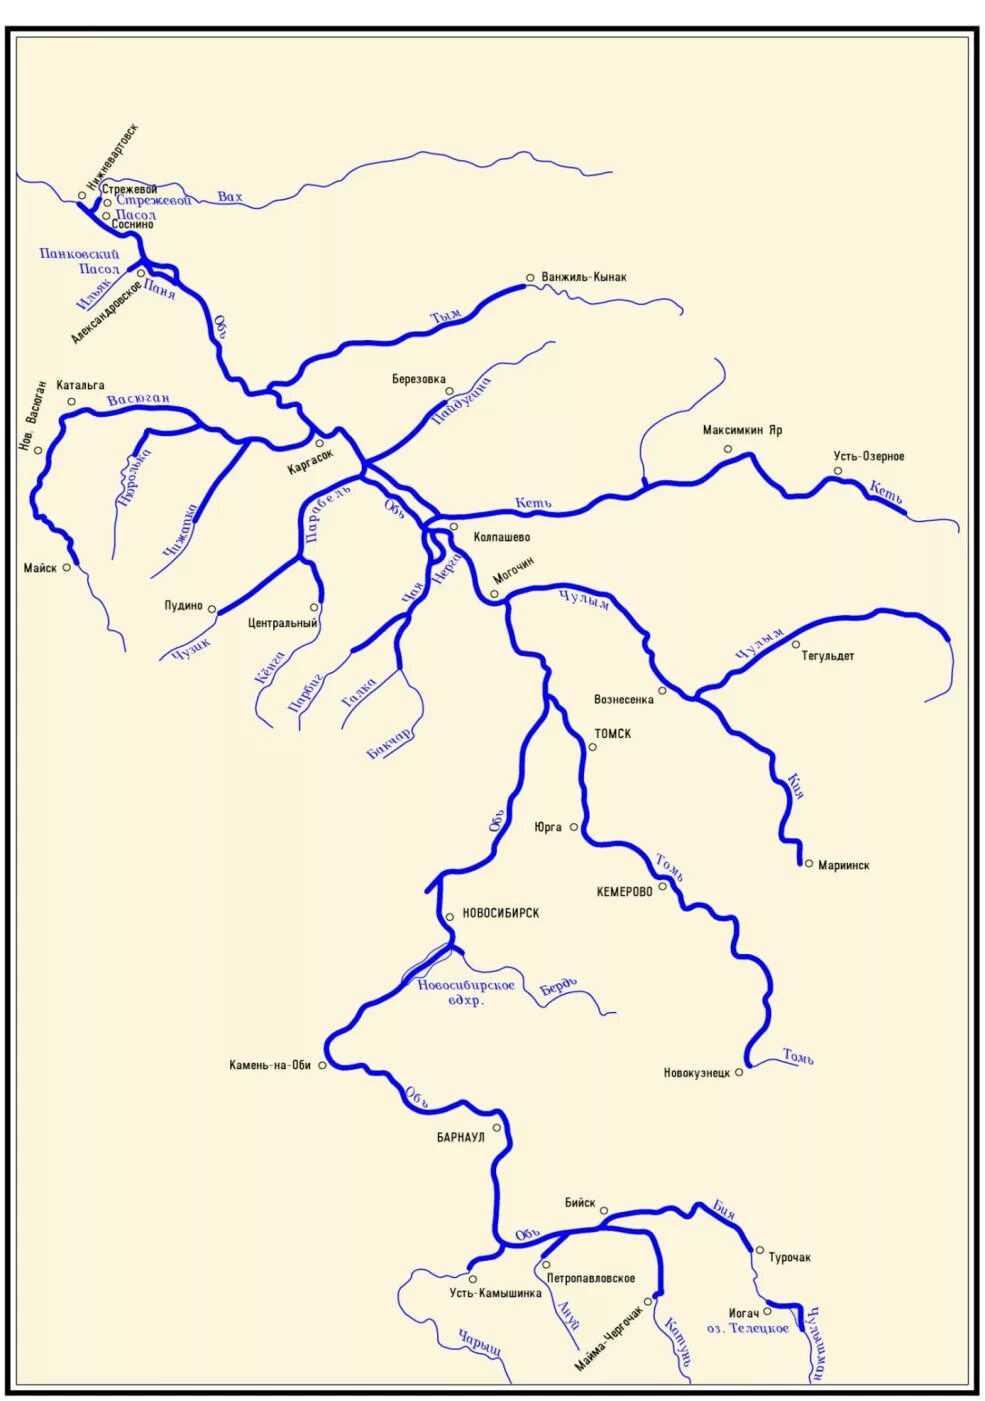 Карта движения рек. Река Иртыш бассейн реки схема. Схема бассейна реки Обь. Бассейн реки Иртыш. Река Енисей на карте Обь и Иртыш.